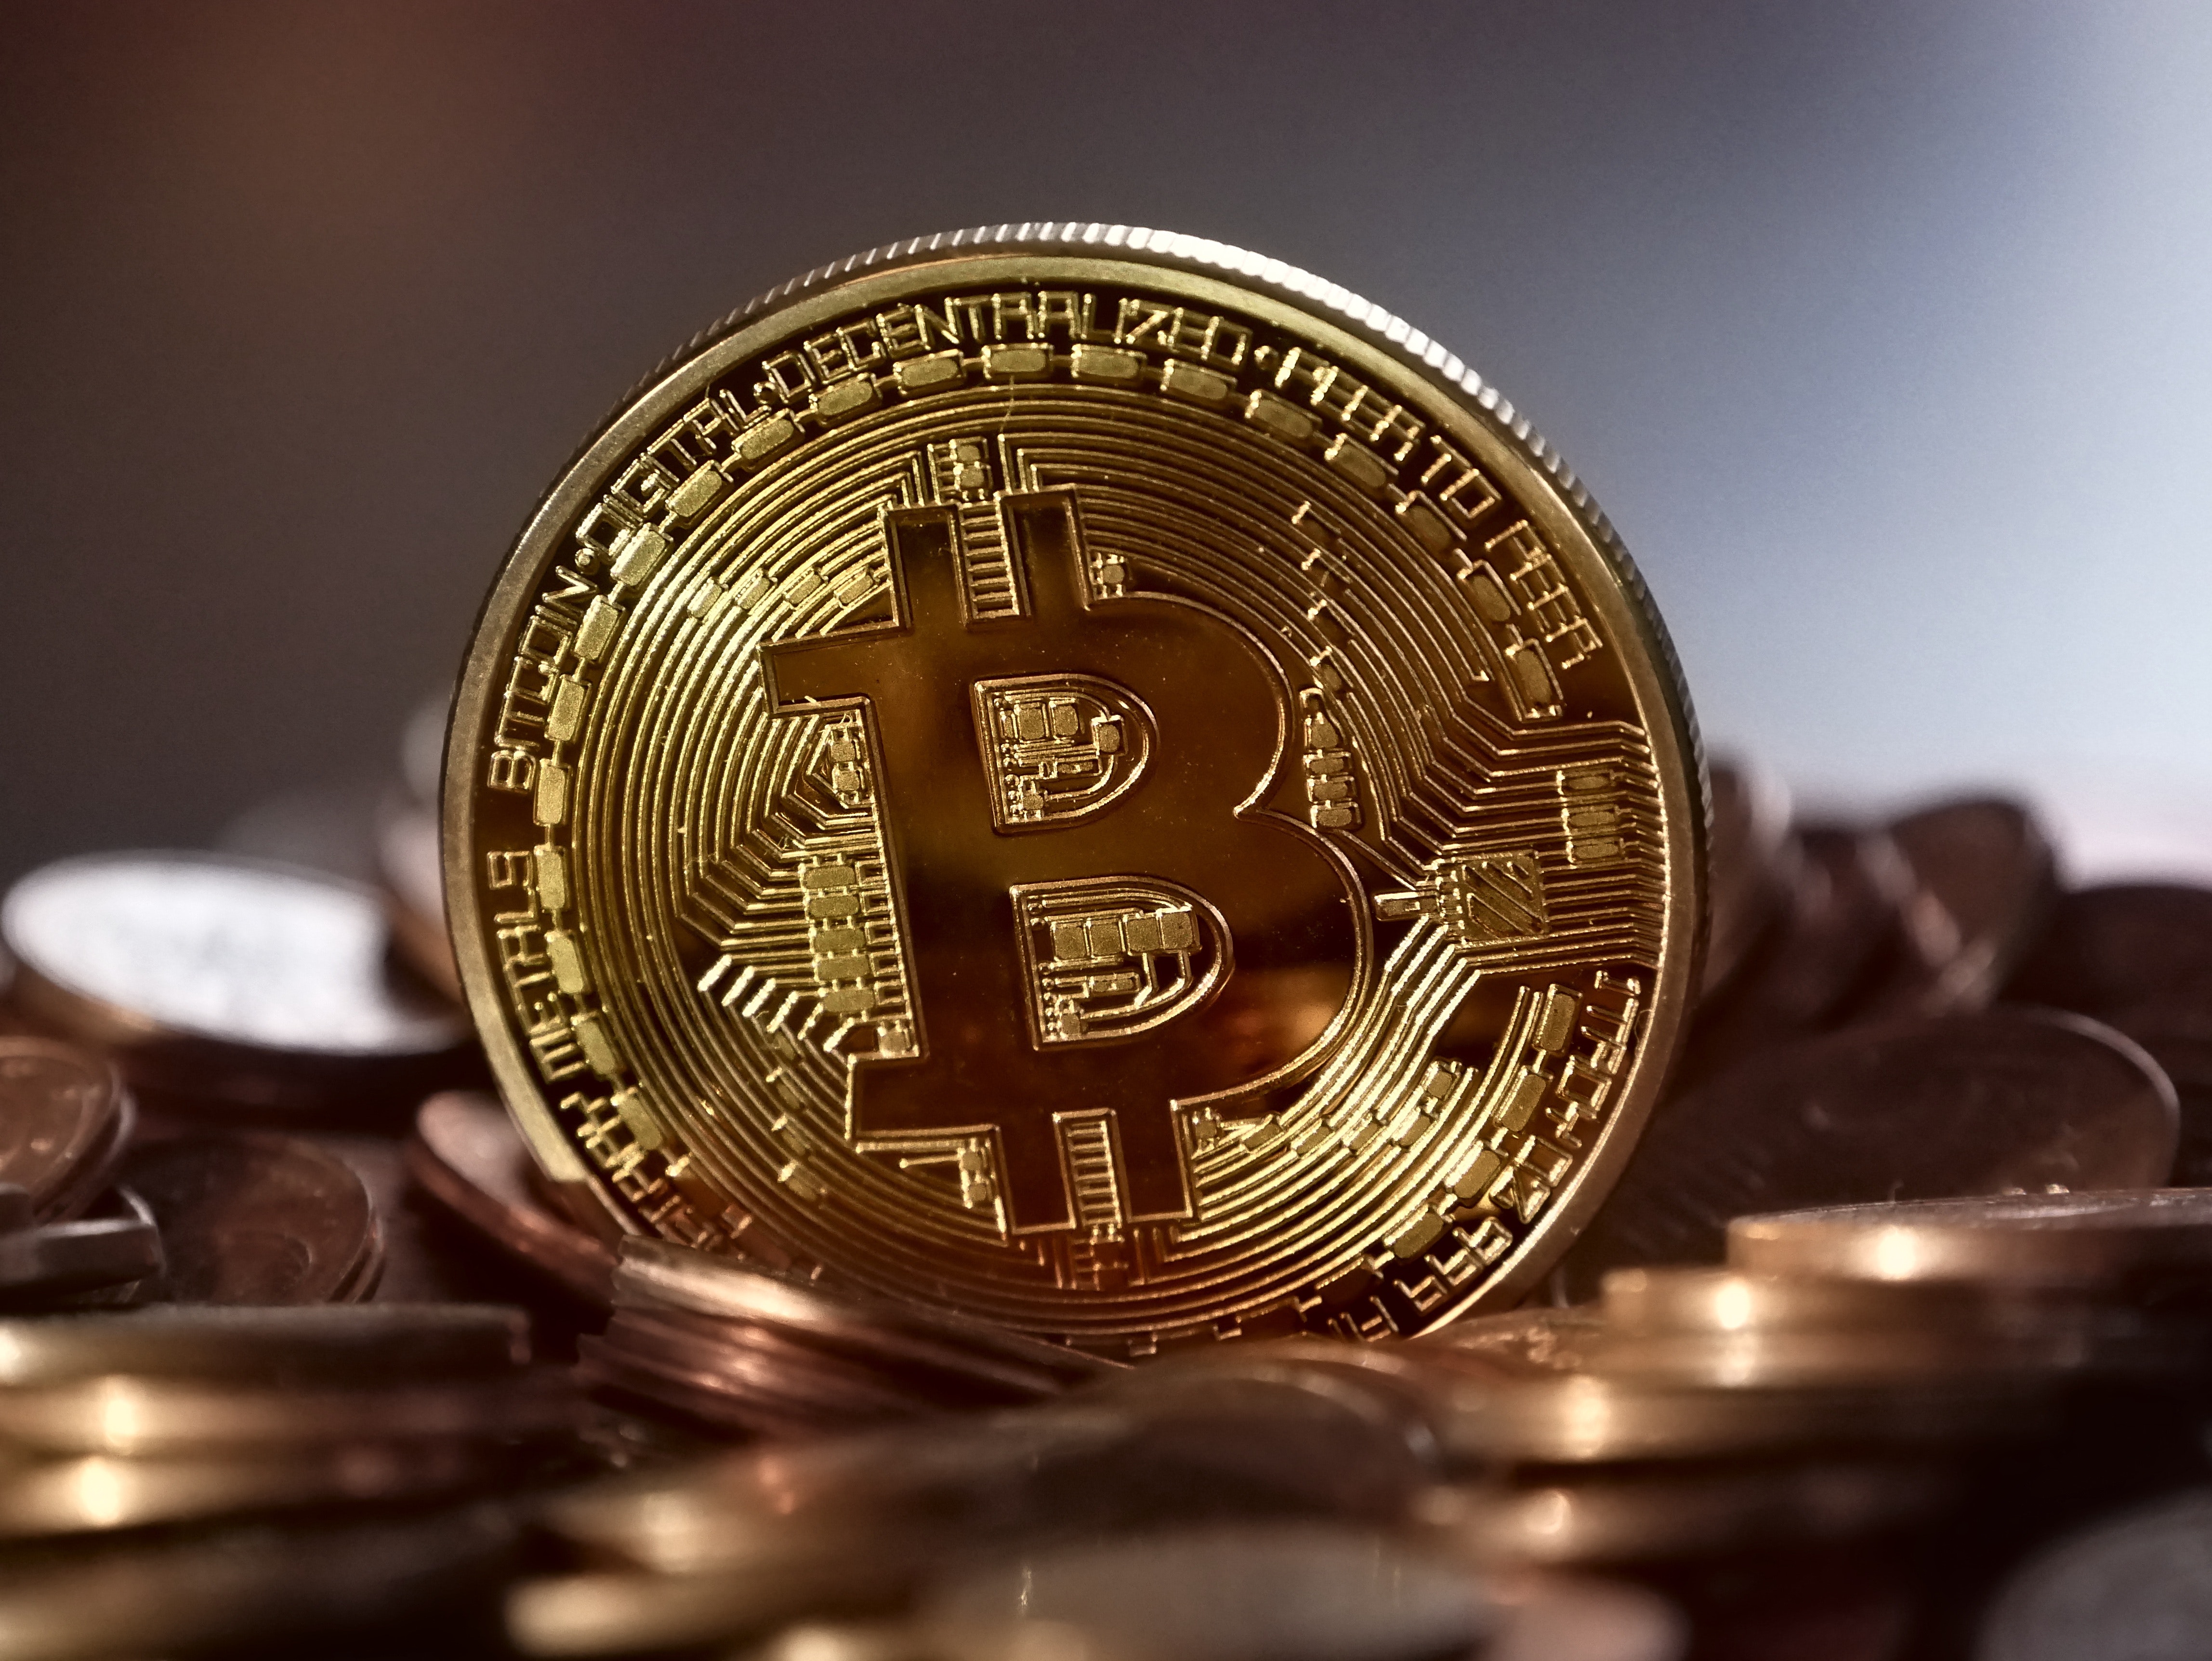 Cryptocurrency News Brief: Bitcoin Becoming More Legitimate Despite SEC